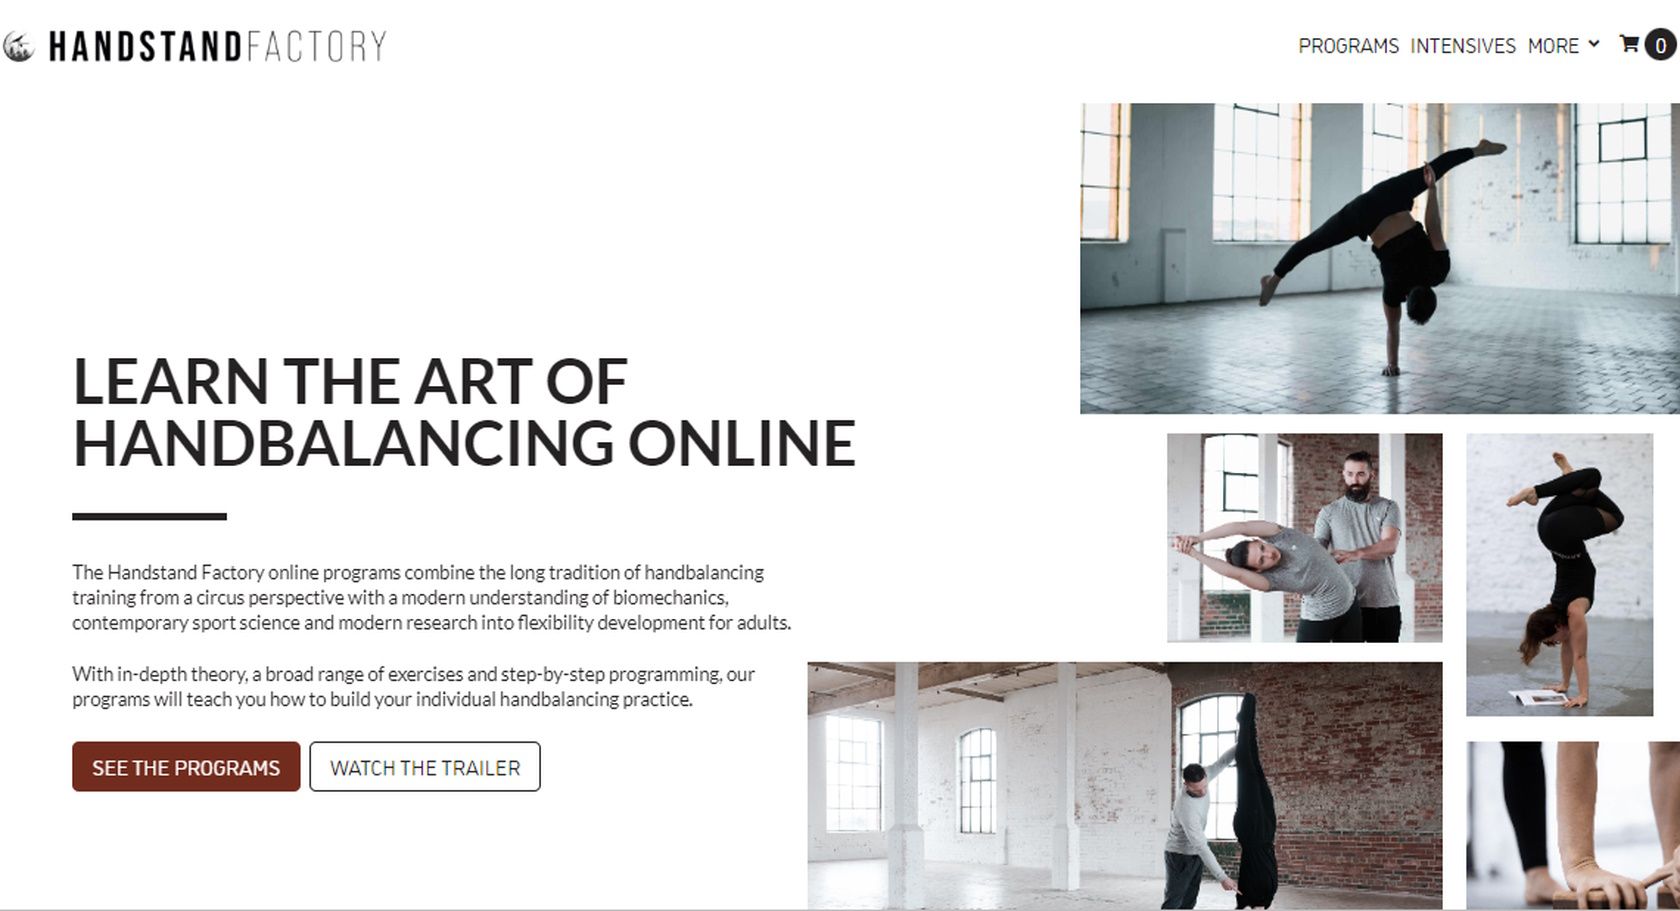 handstand factory handbalancing online programs